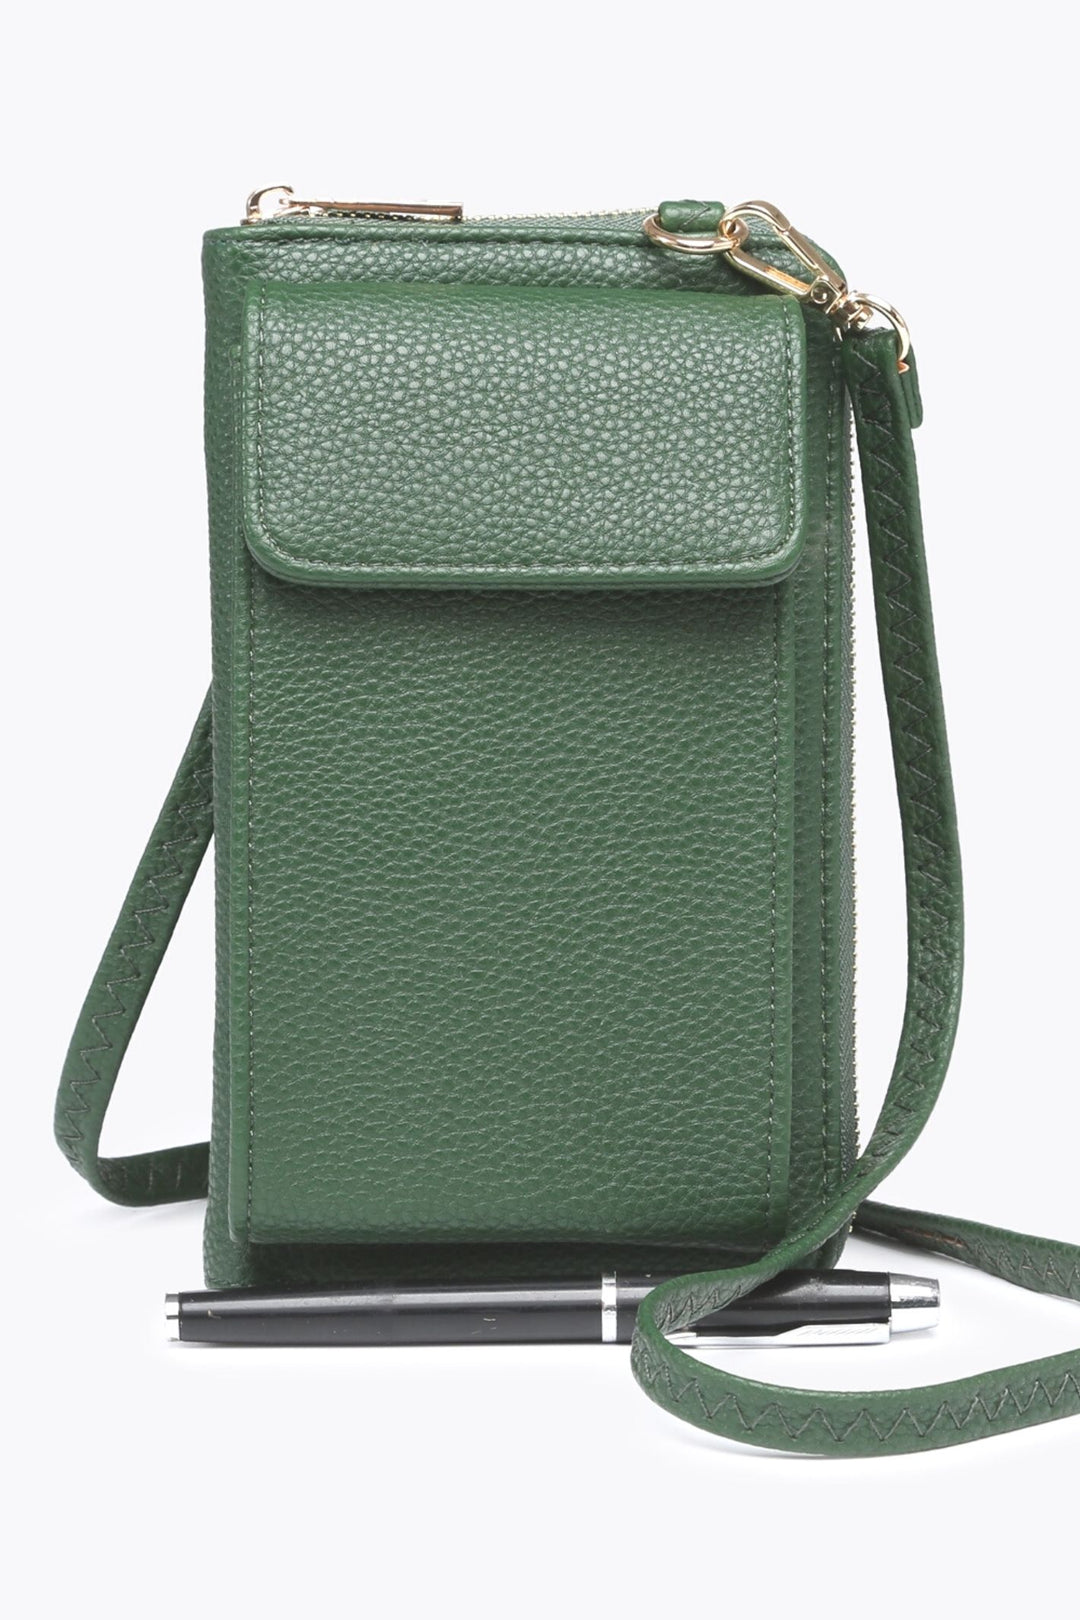 Phone Cross Body Bag Jade Green - Sugarplum Boutique